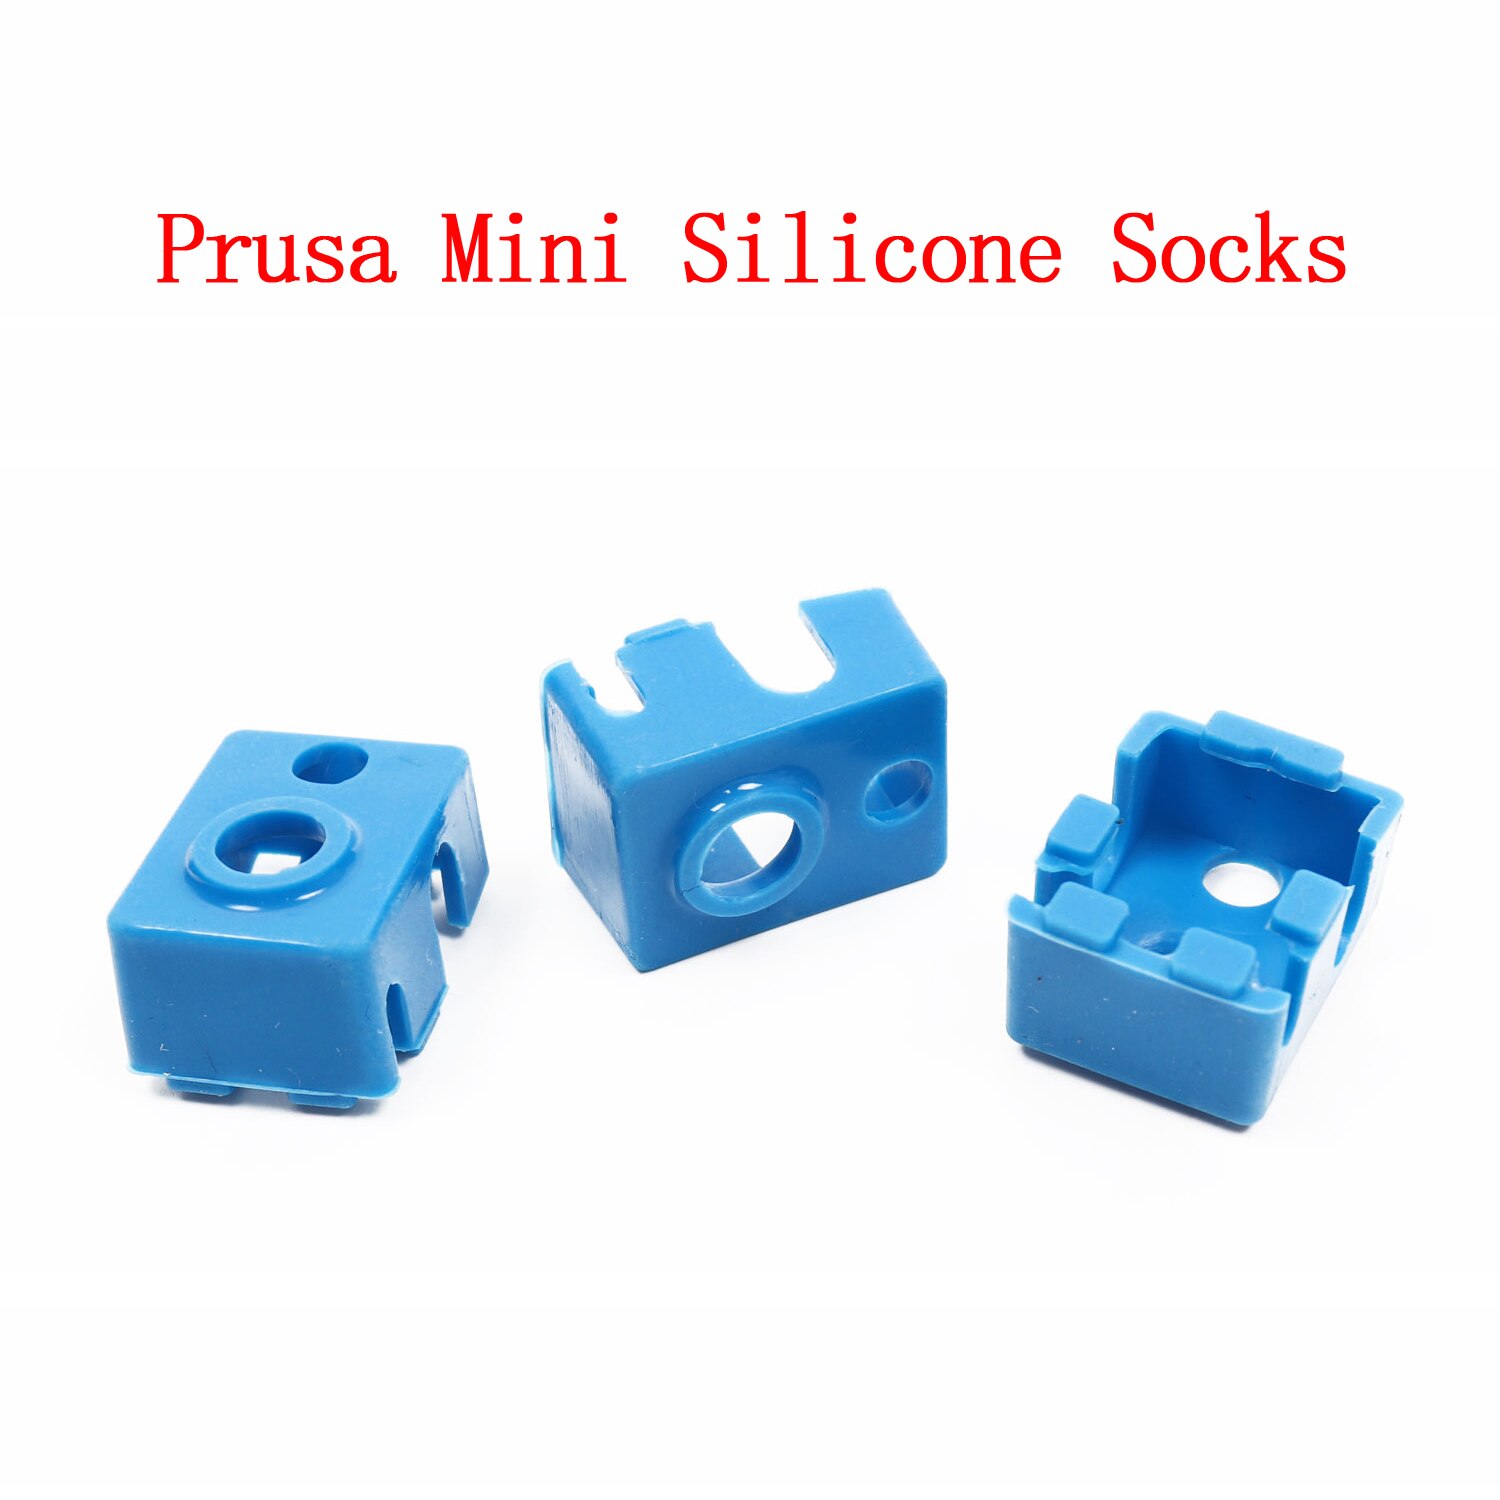 Blurolls prusa mini 3d printer ekstruder varmeblok silikone sokker